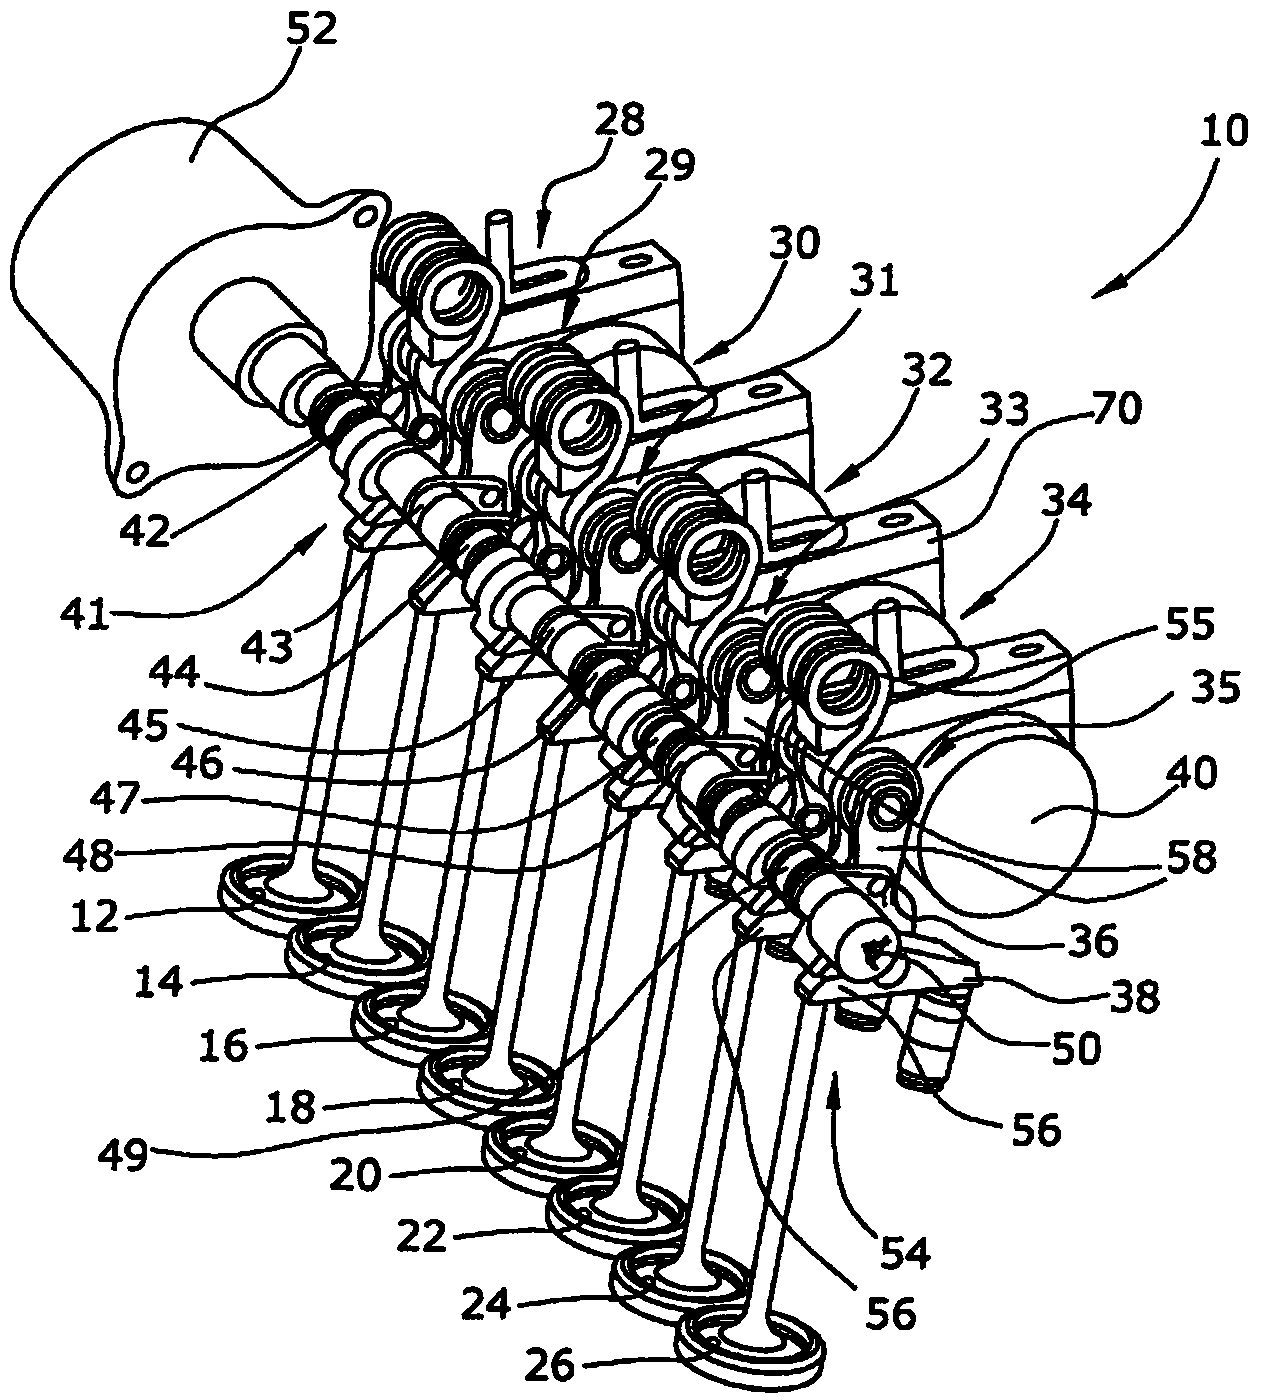 Mechanically controllable valve drive arrangement